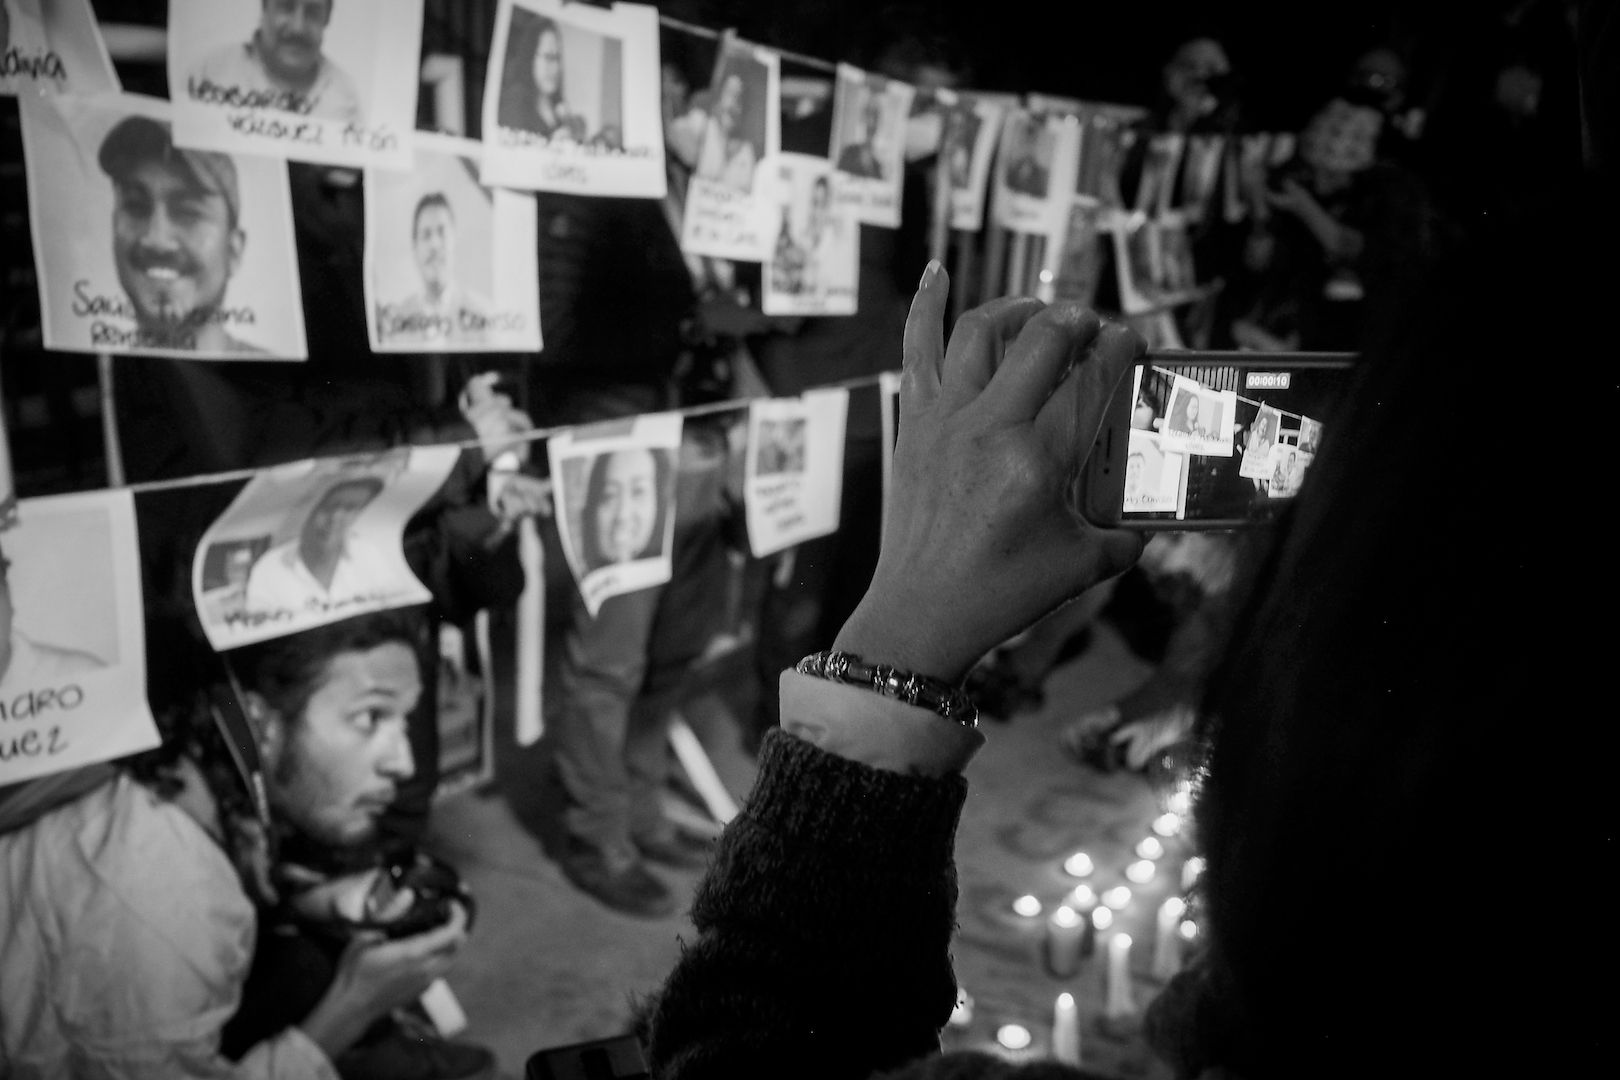 People in Ciudad de México protesting against murdering of journalists.